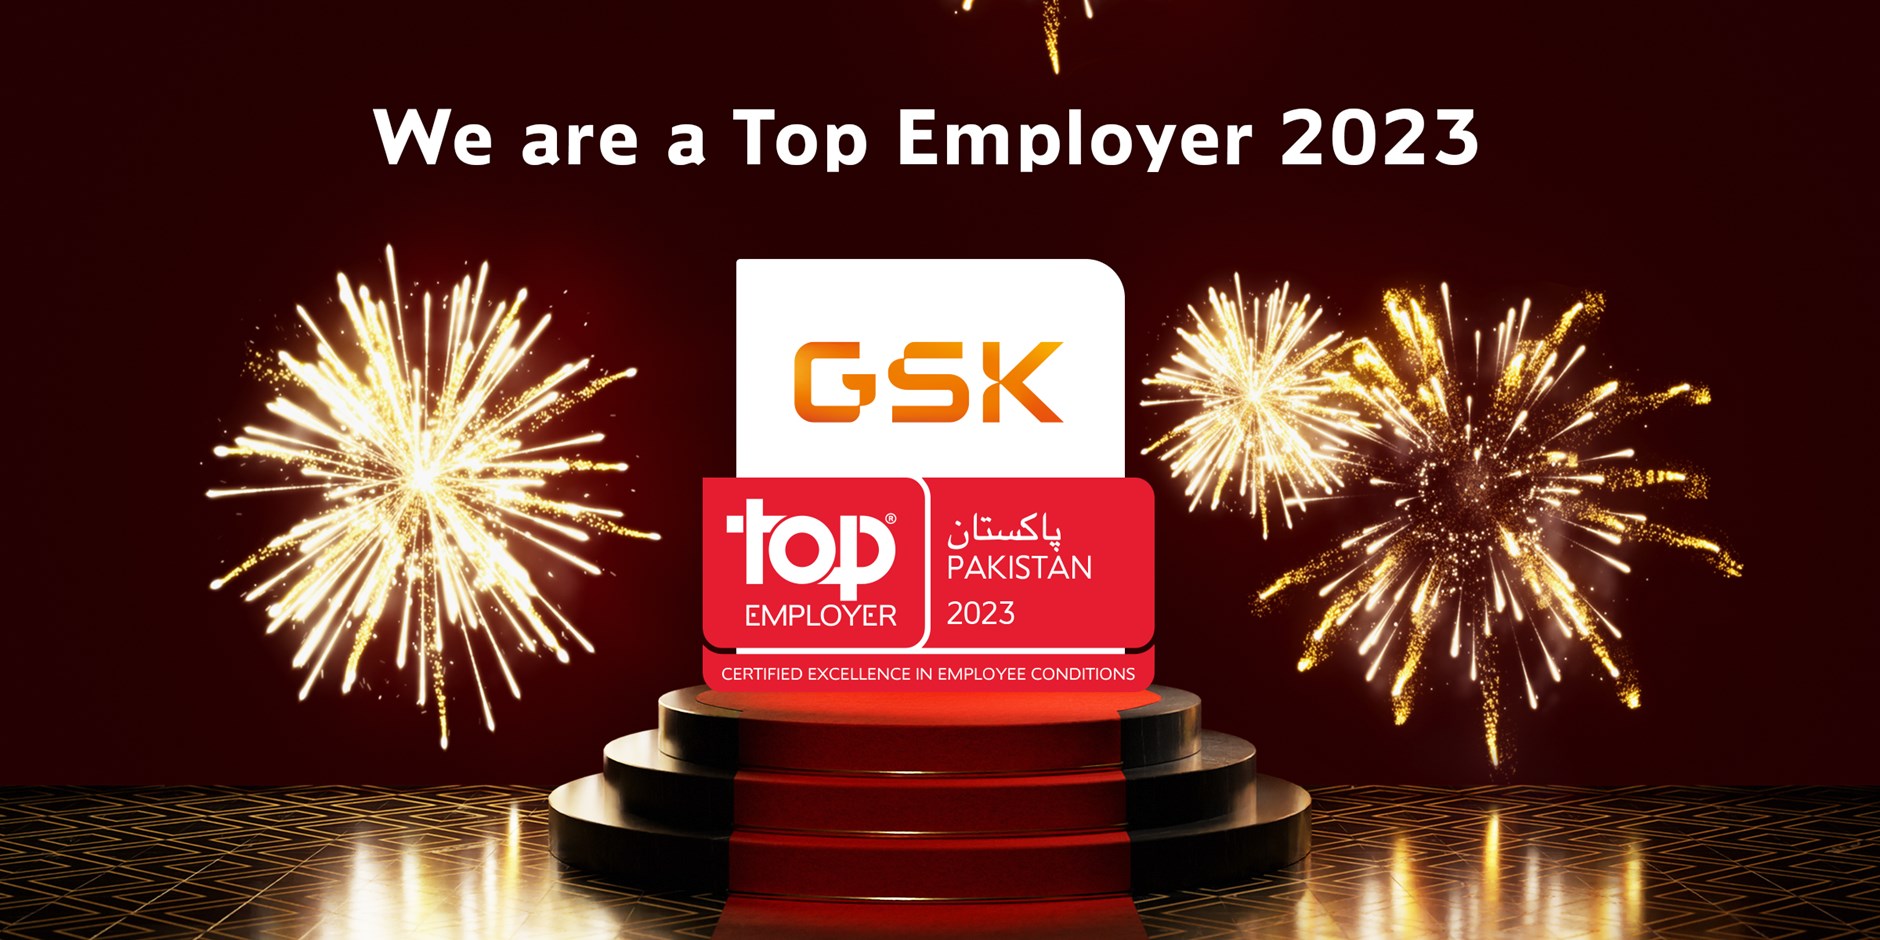 Top Employer 2023 Certification